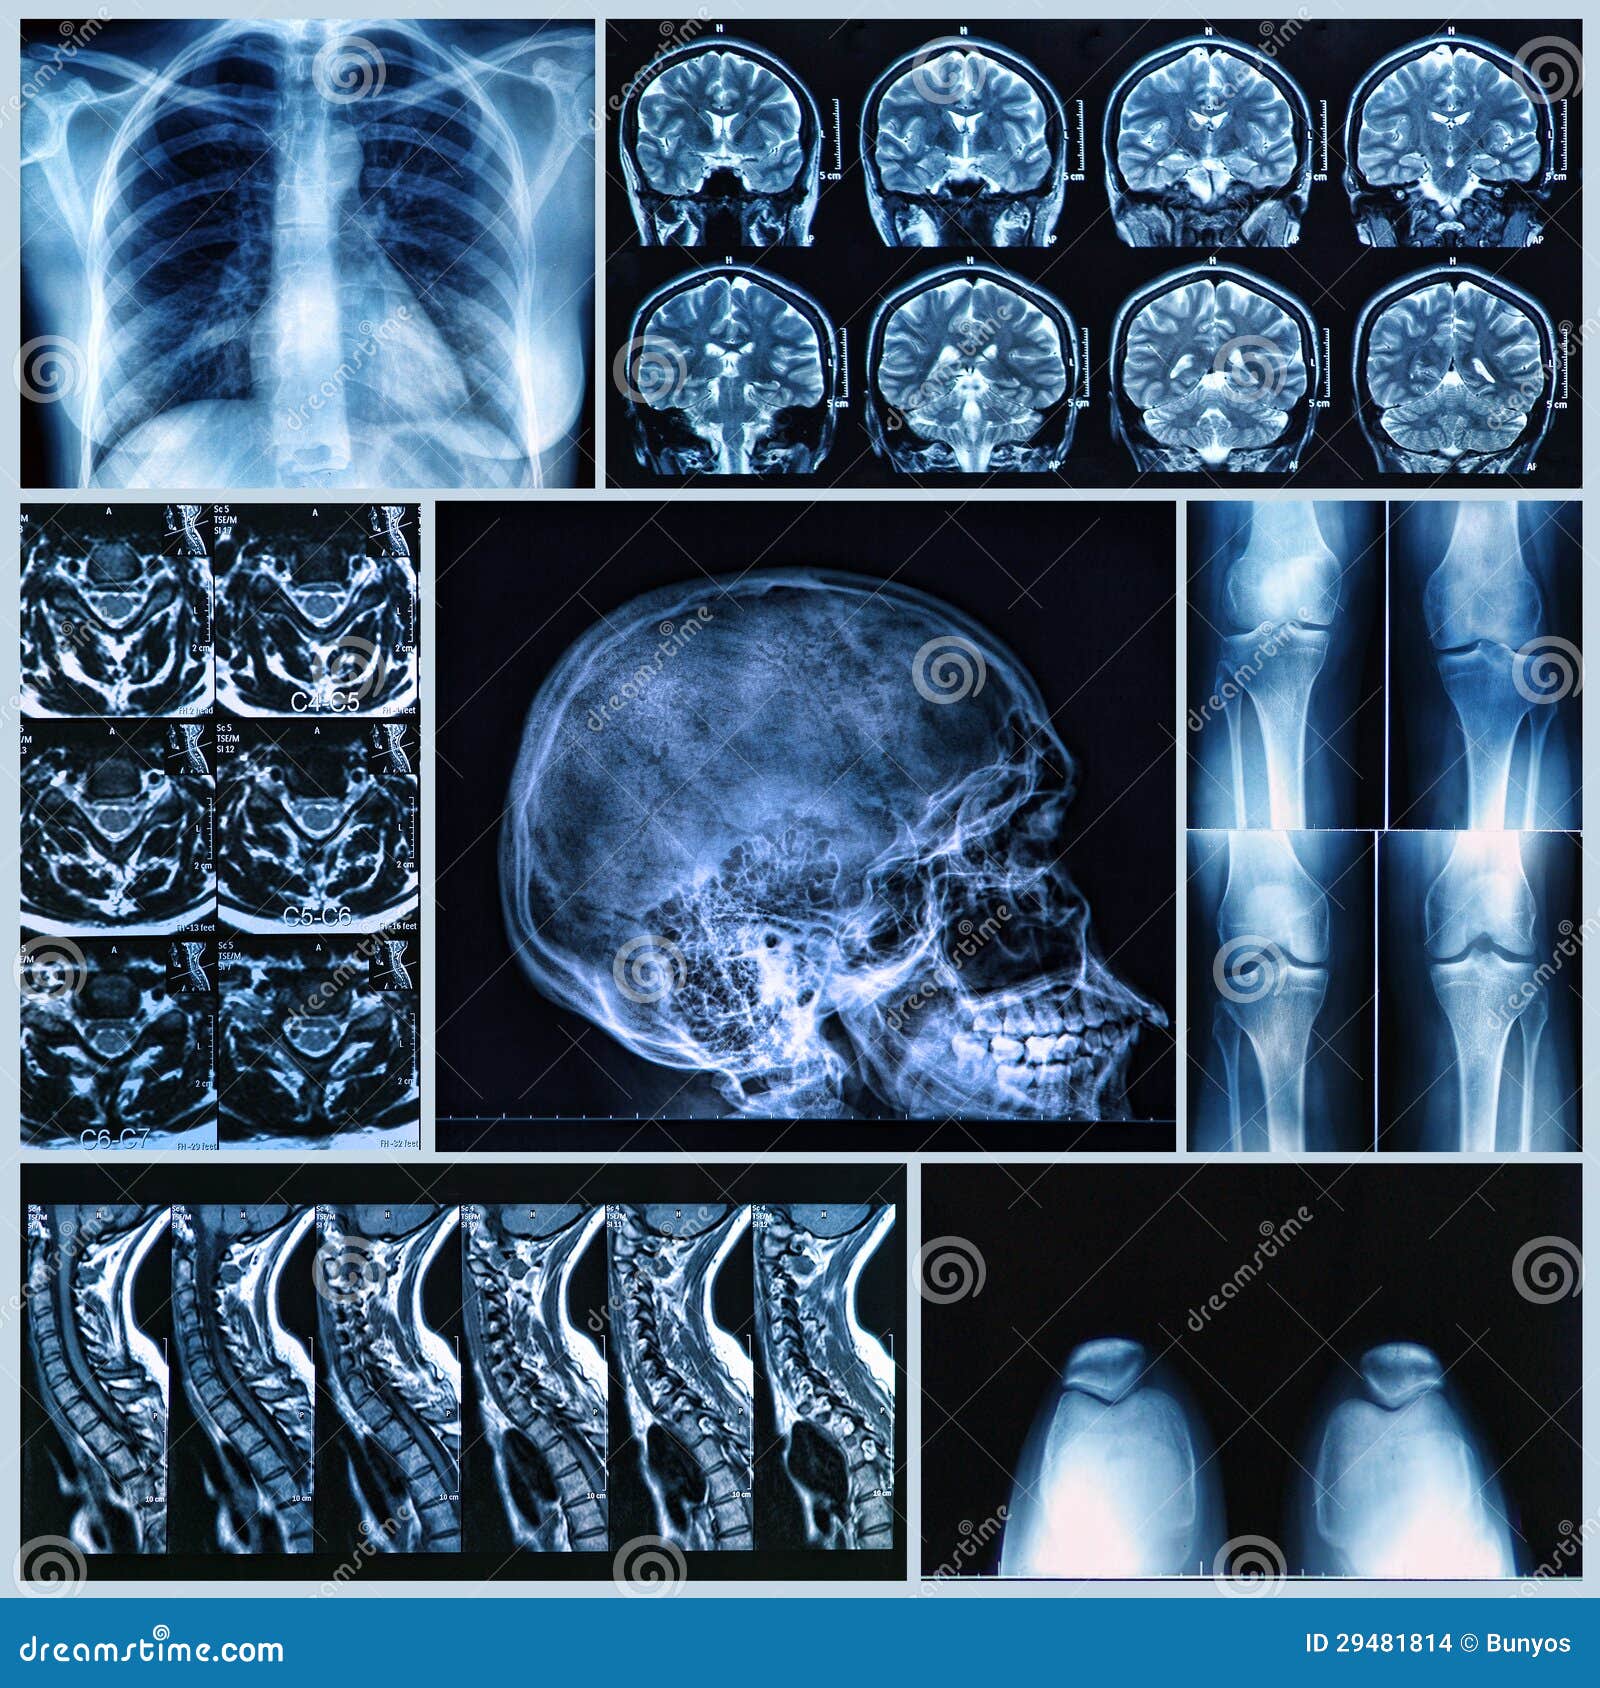 radiography of human bones